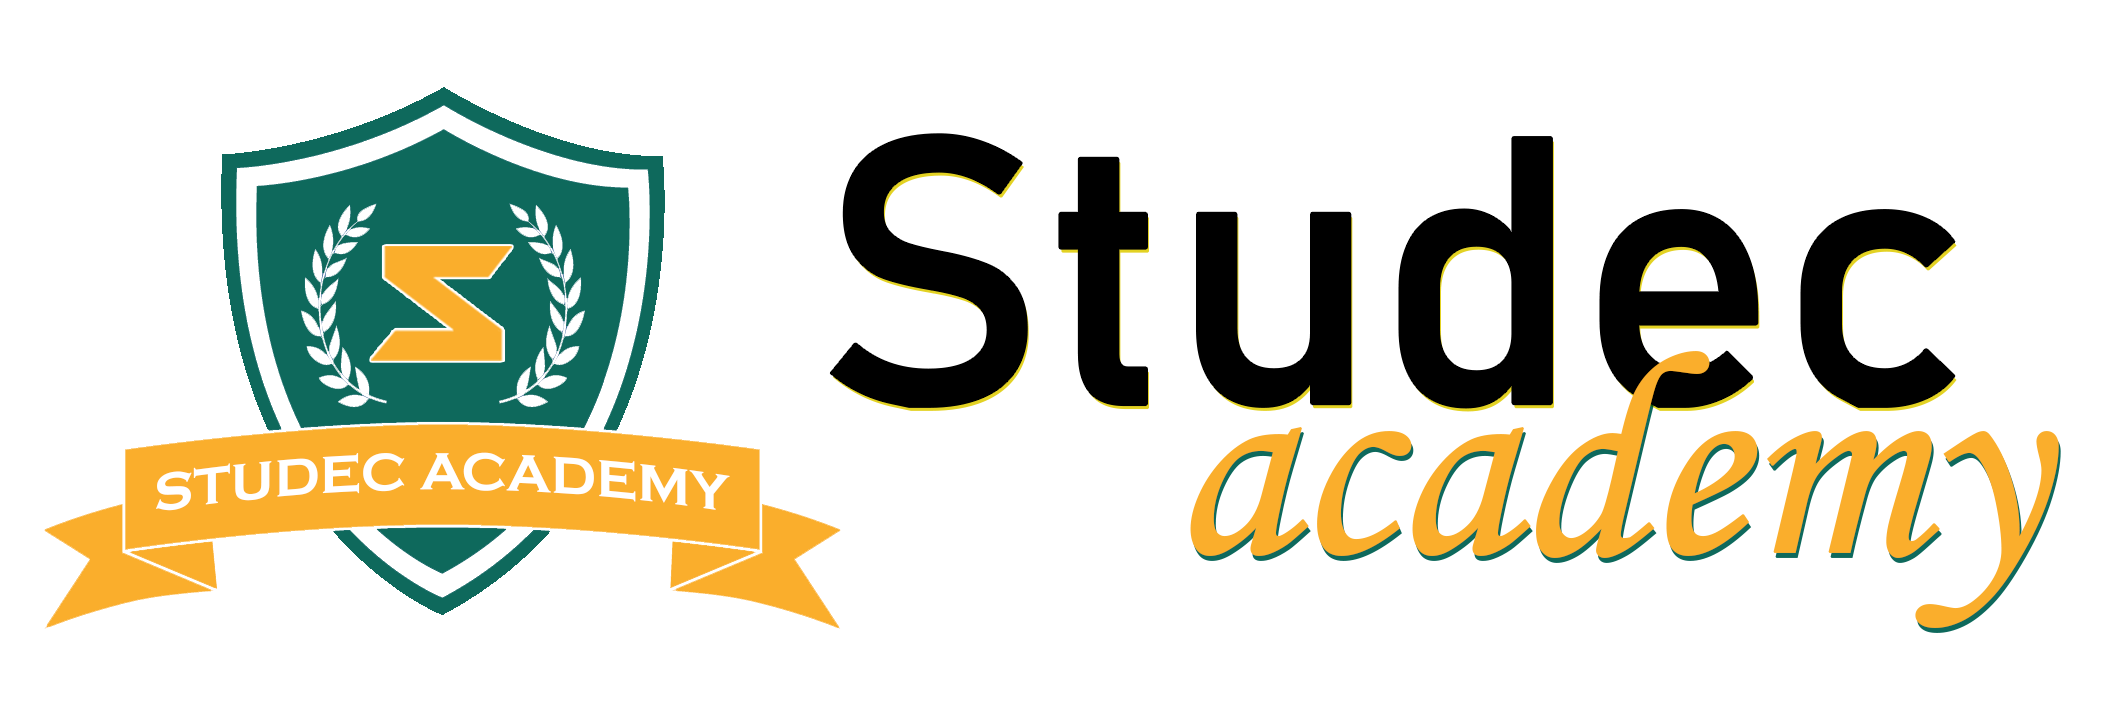 Studec Academy